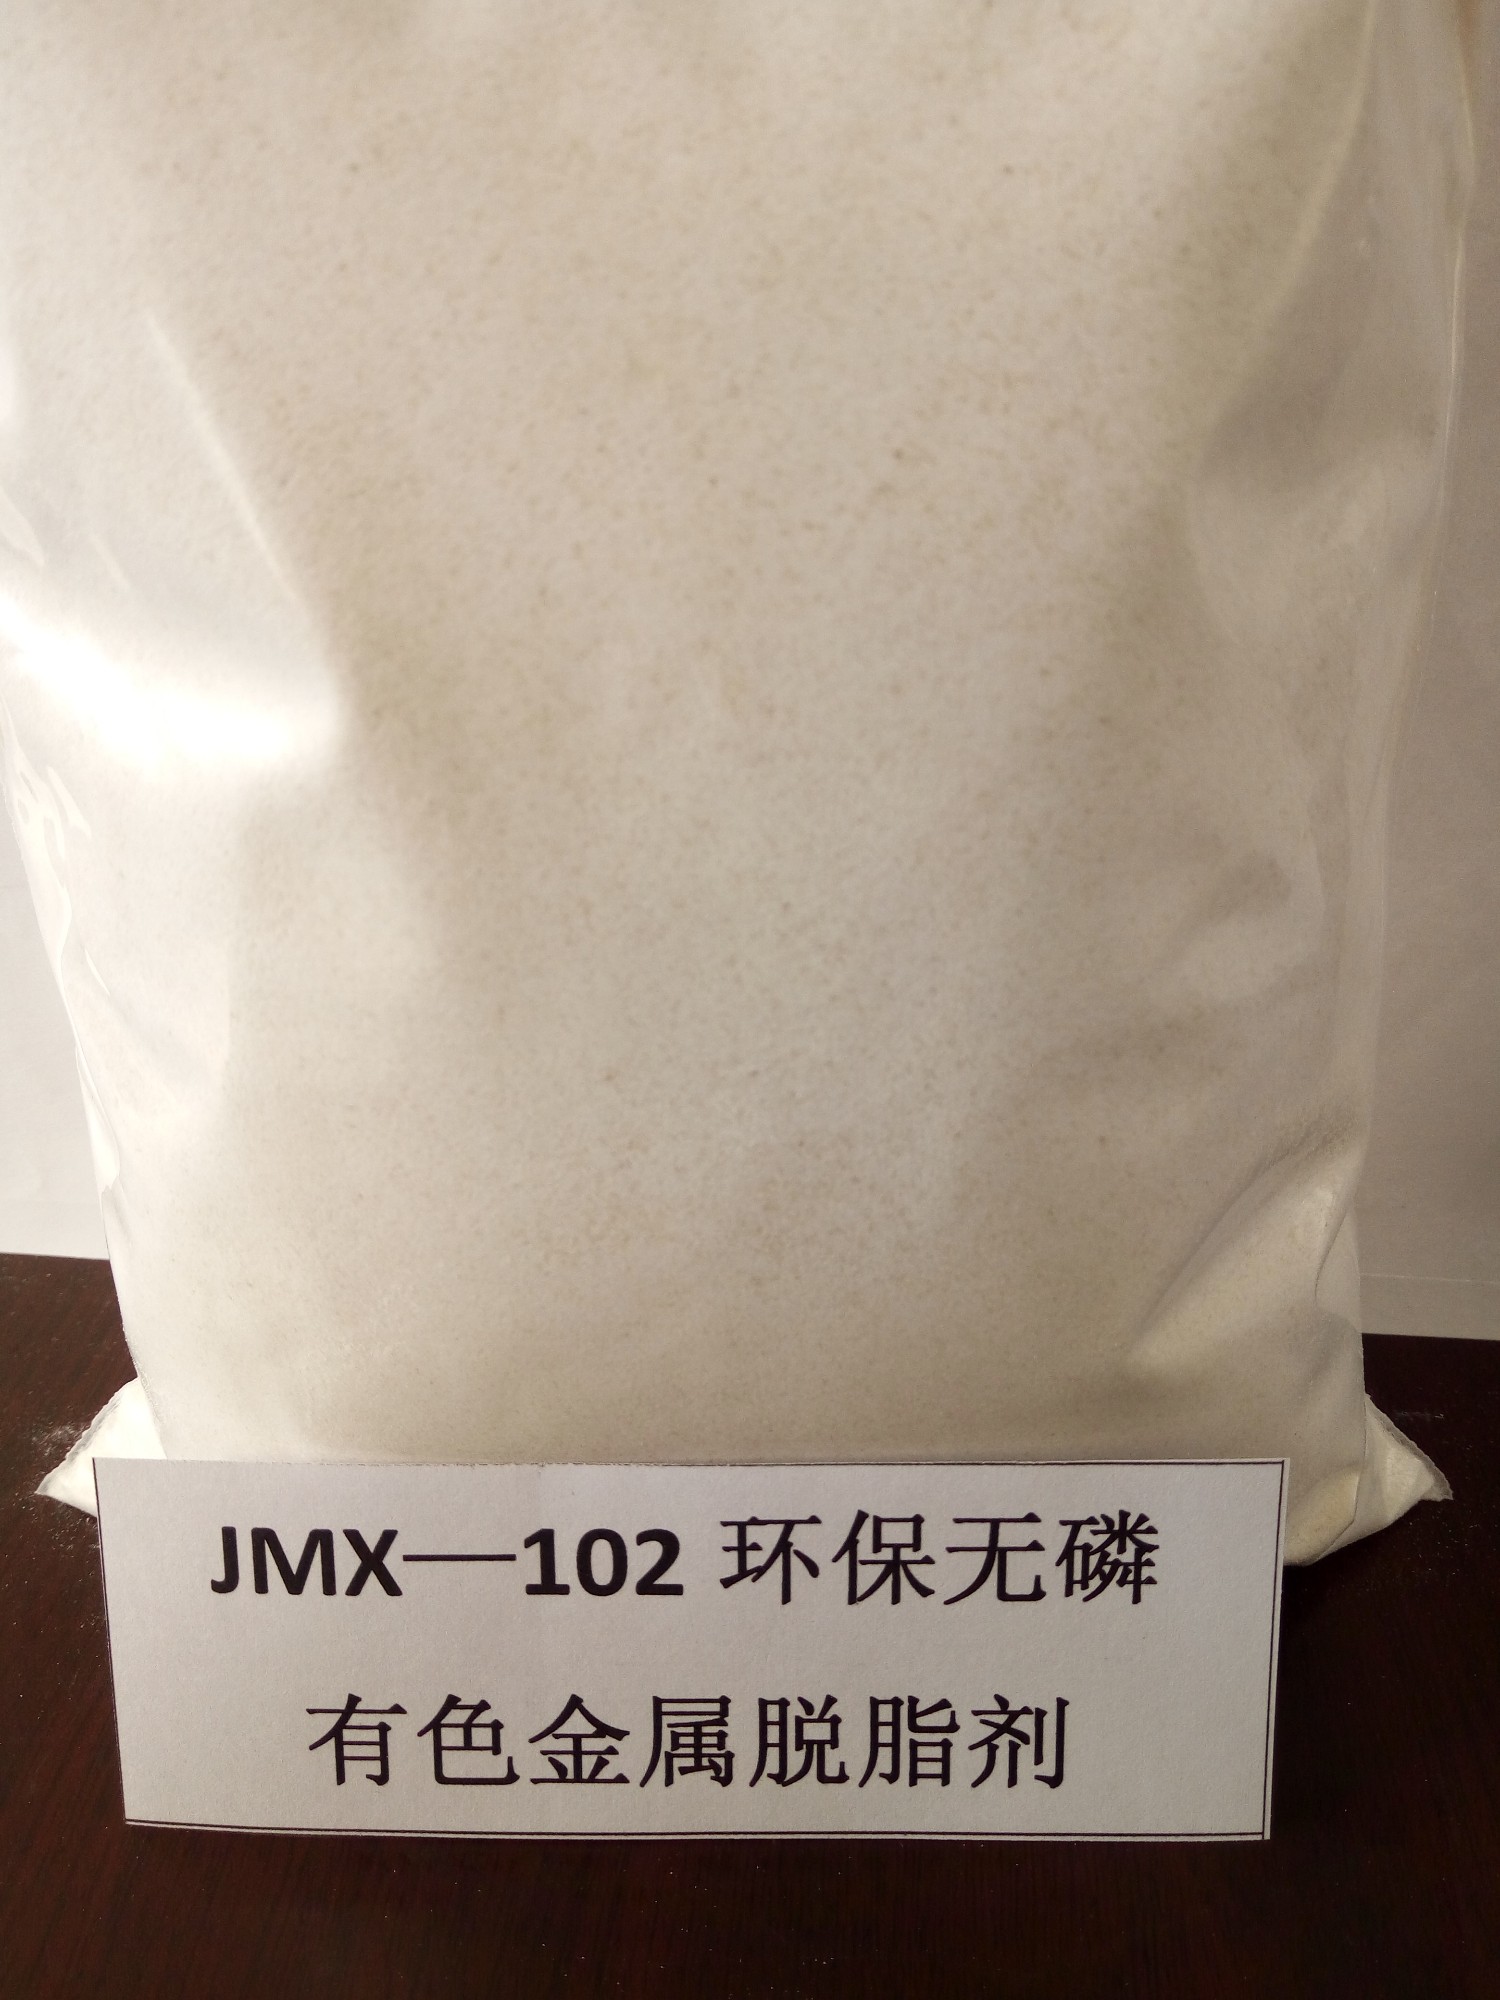 JMX—102环保无磷有色金属脱脂剂